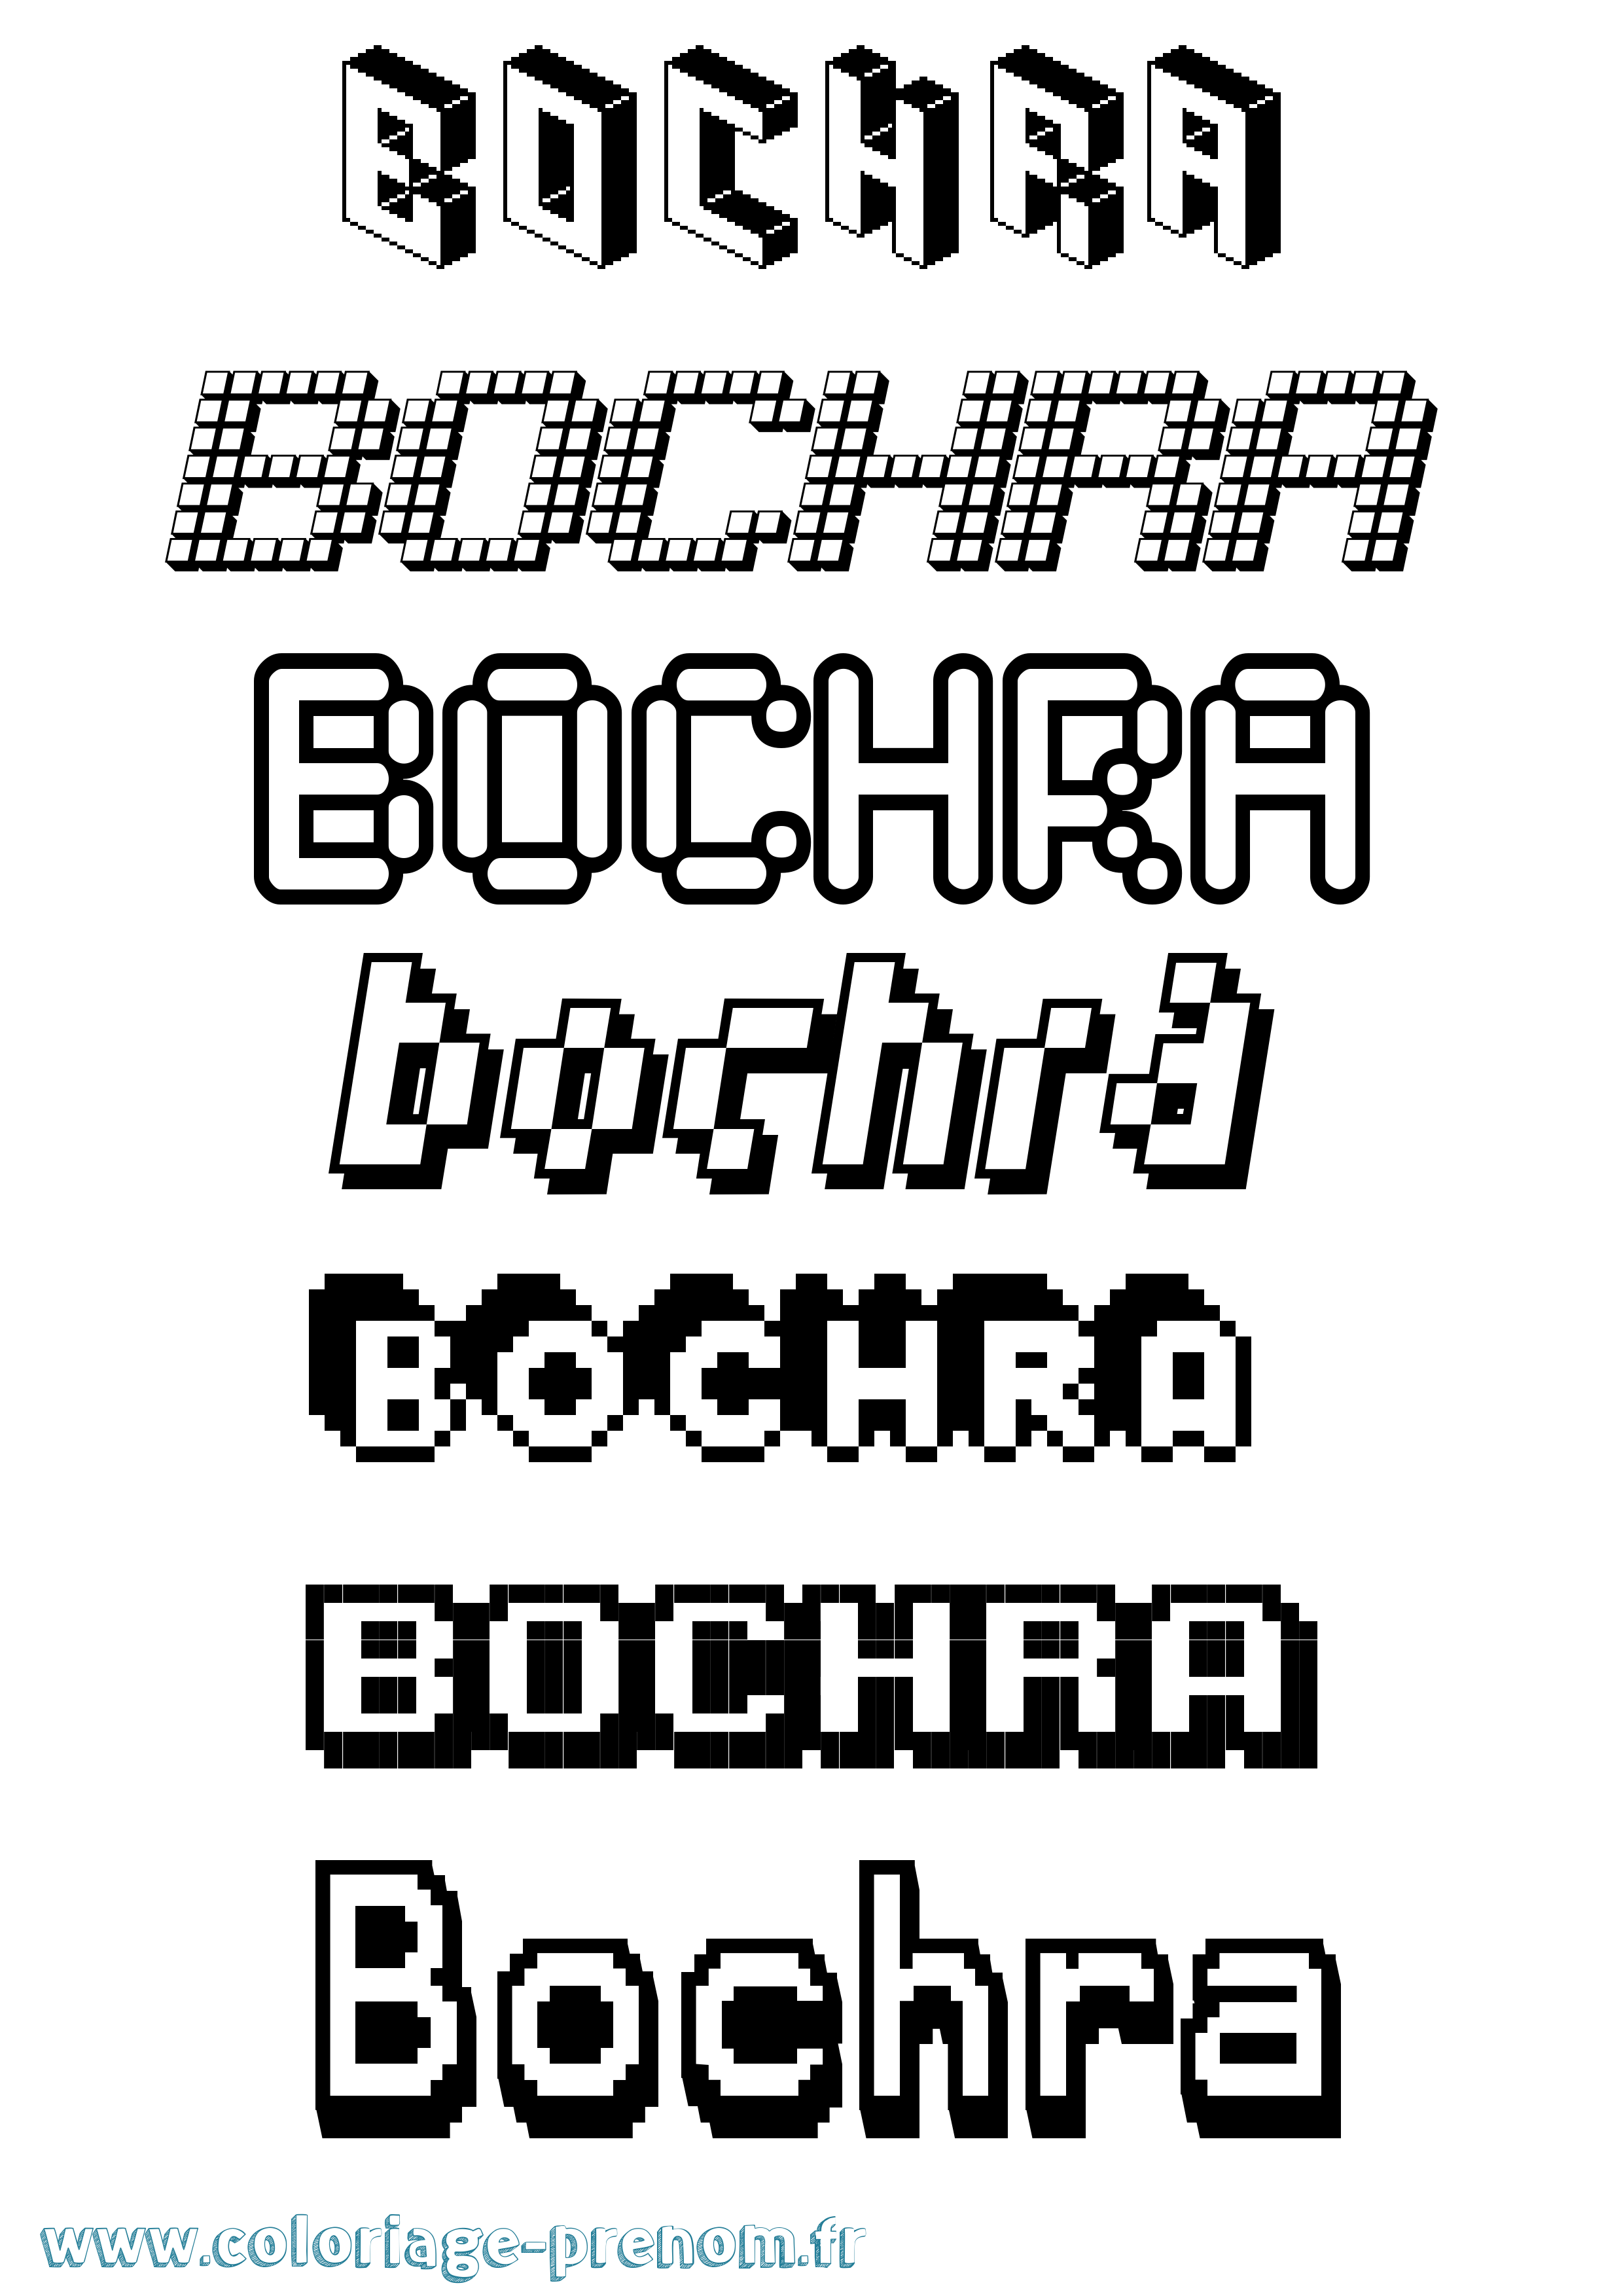 Coloriage prénom Bochra Pixel